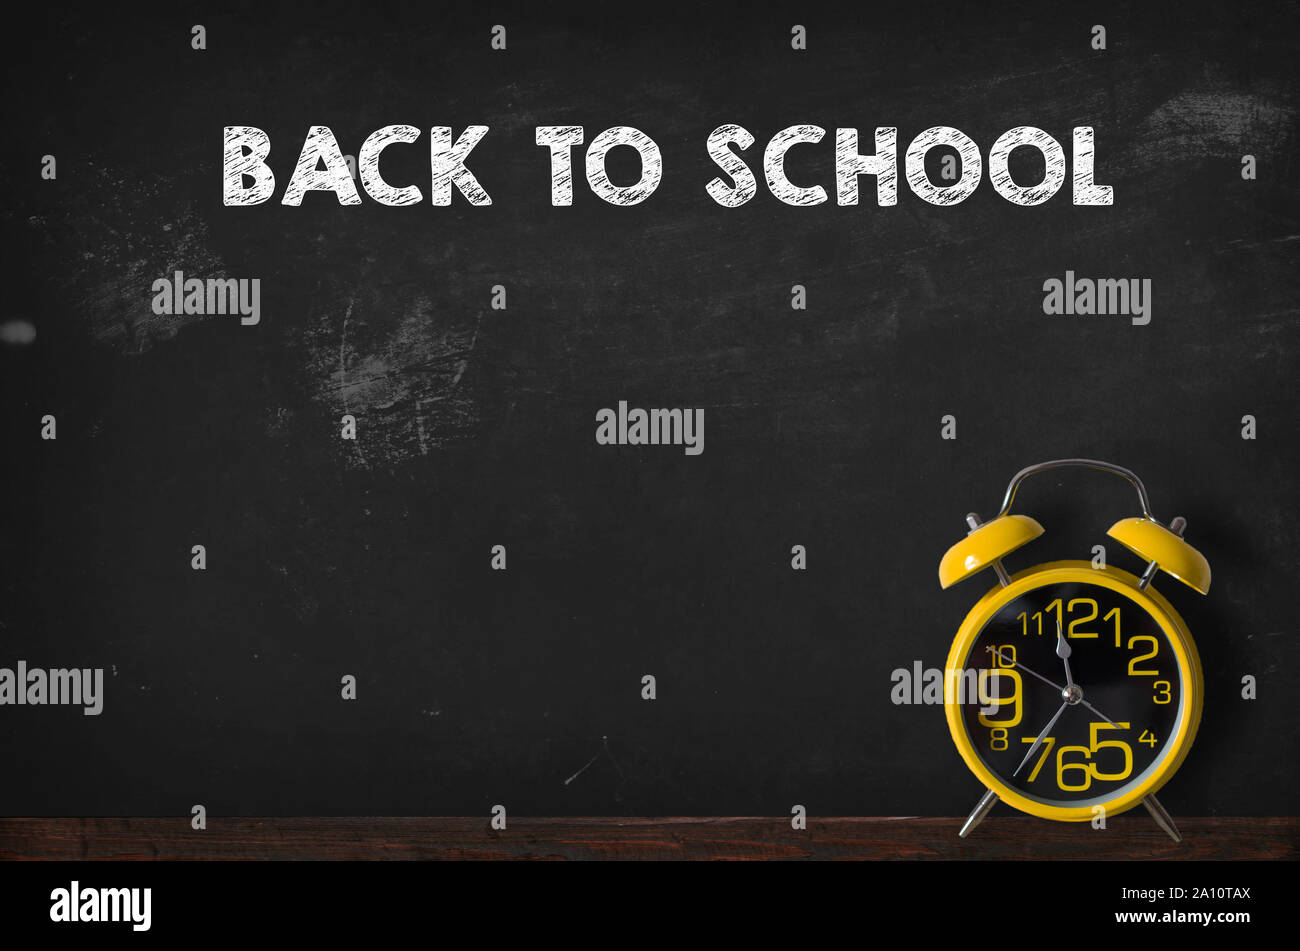 Back to school blackboard with clock, background Stock Photo